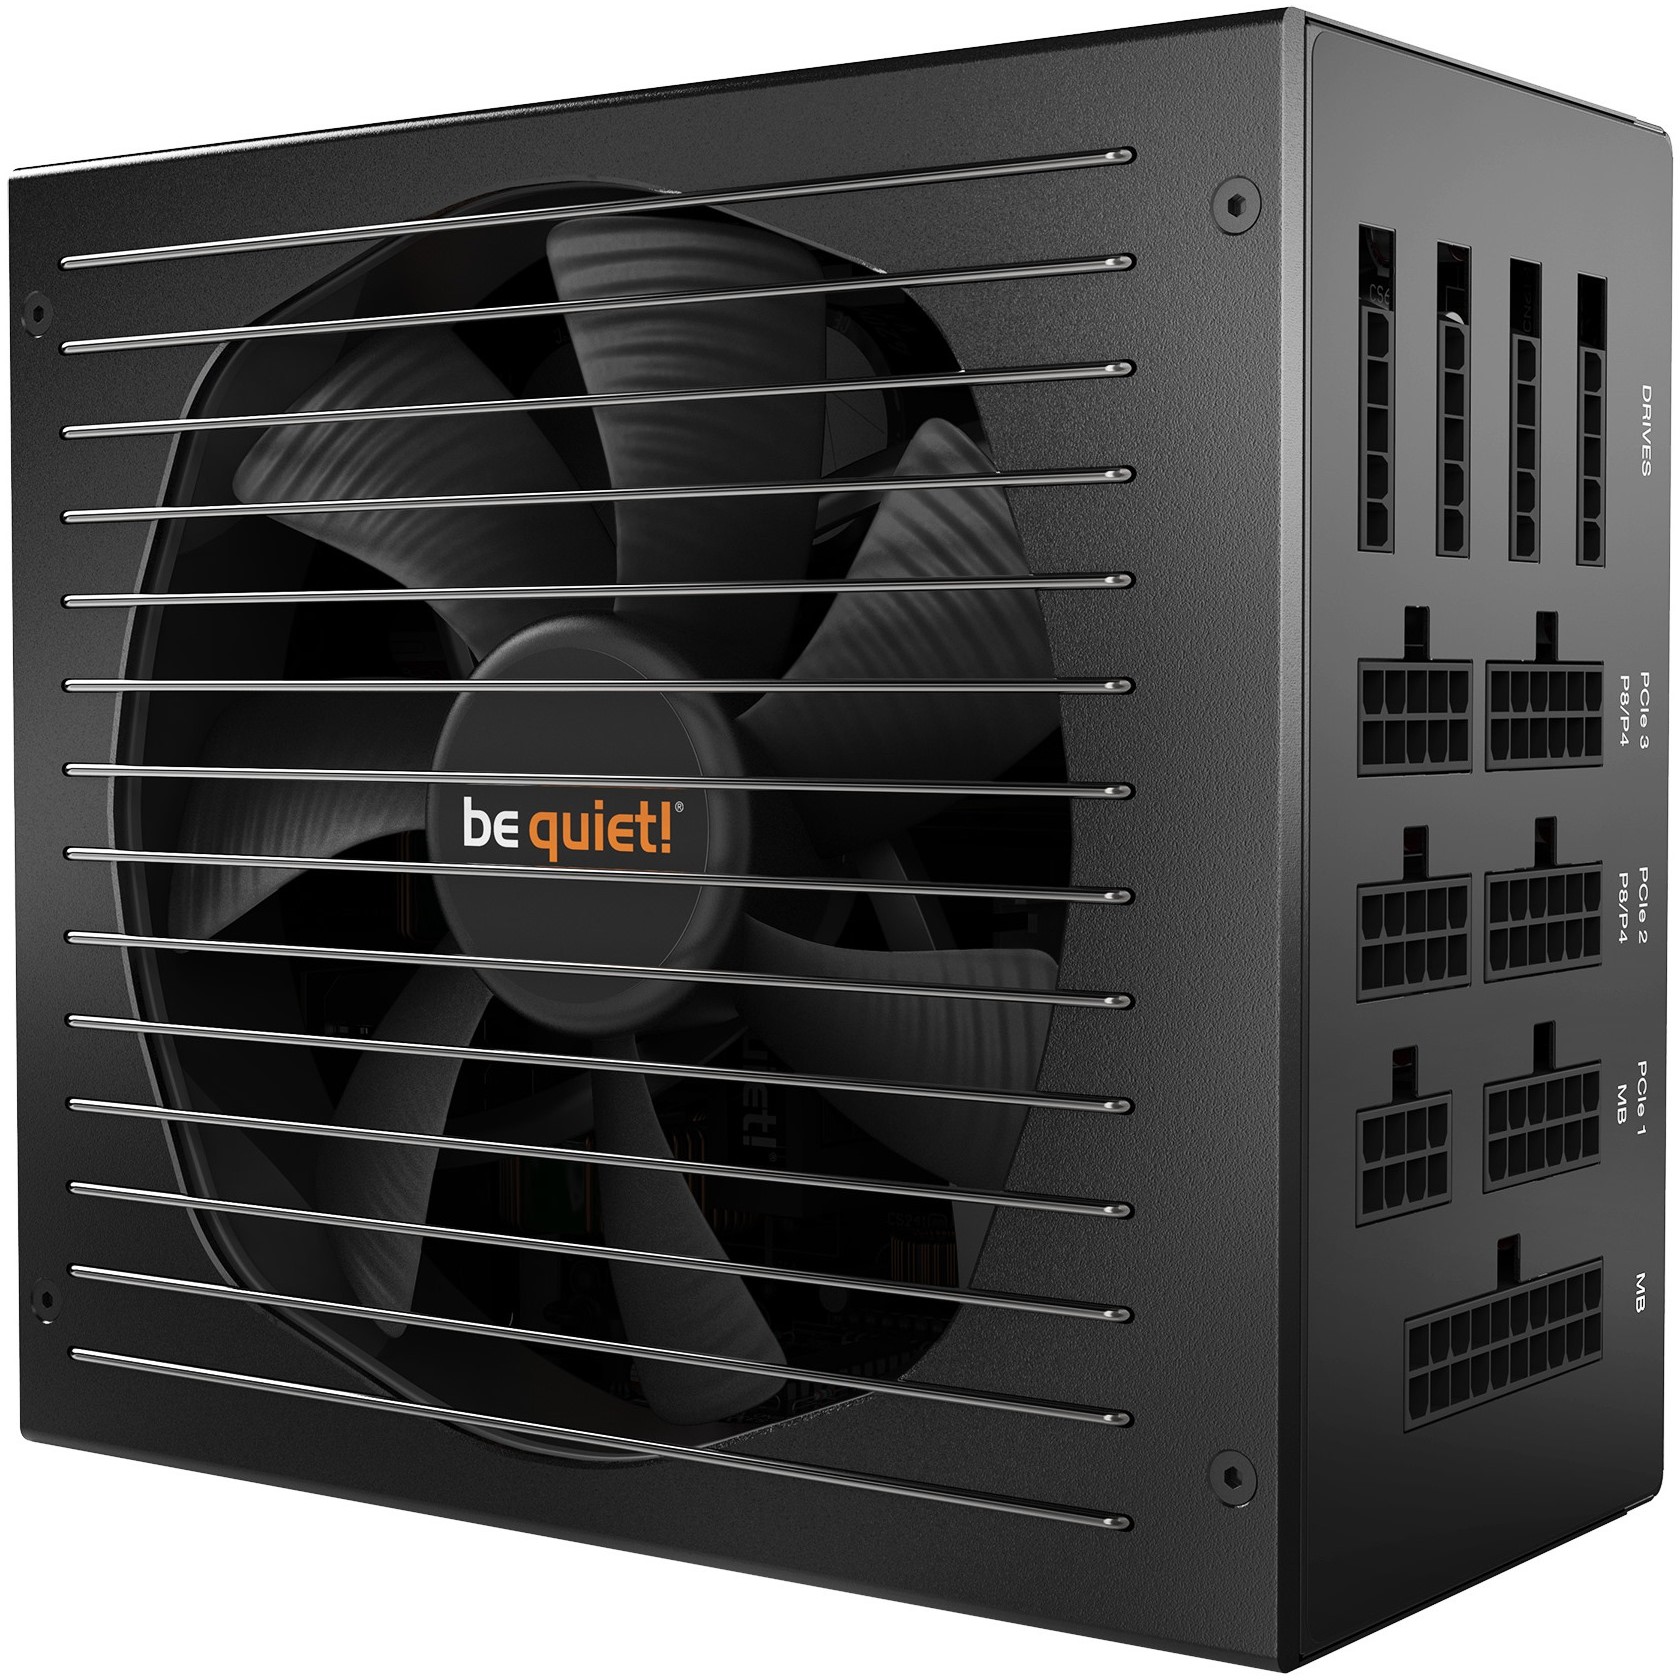 be quiet! Straight Power 11 power supply unit - BN285